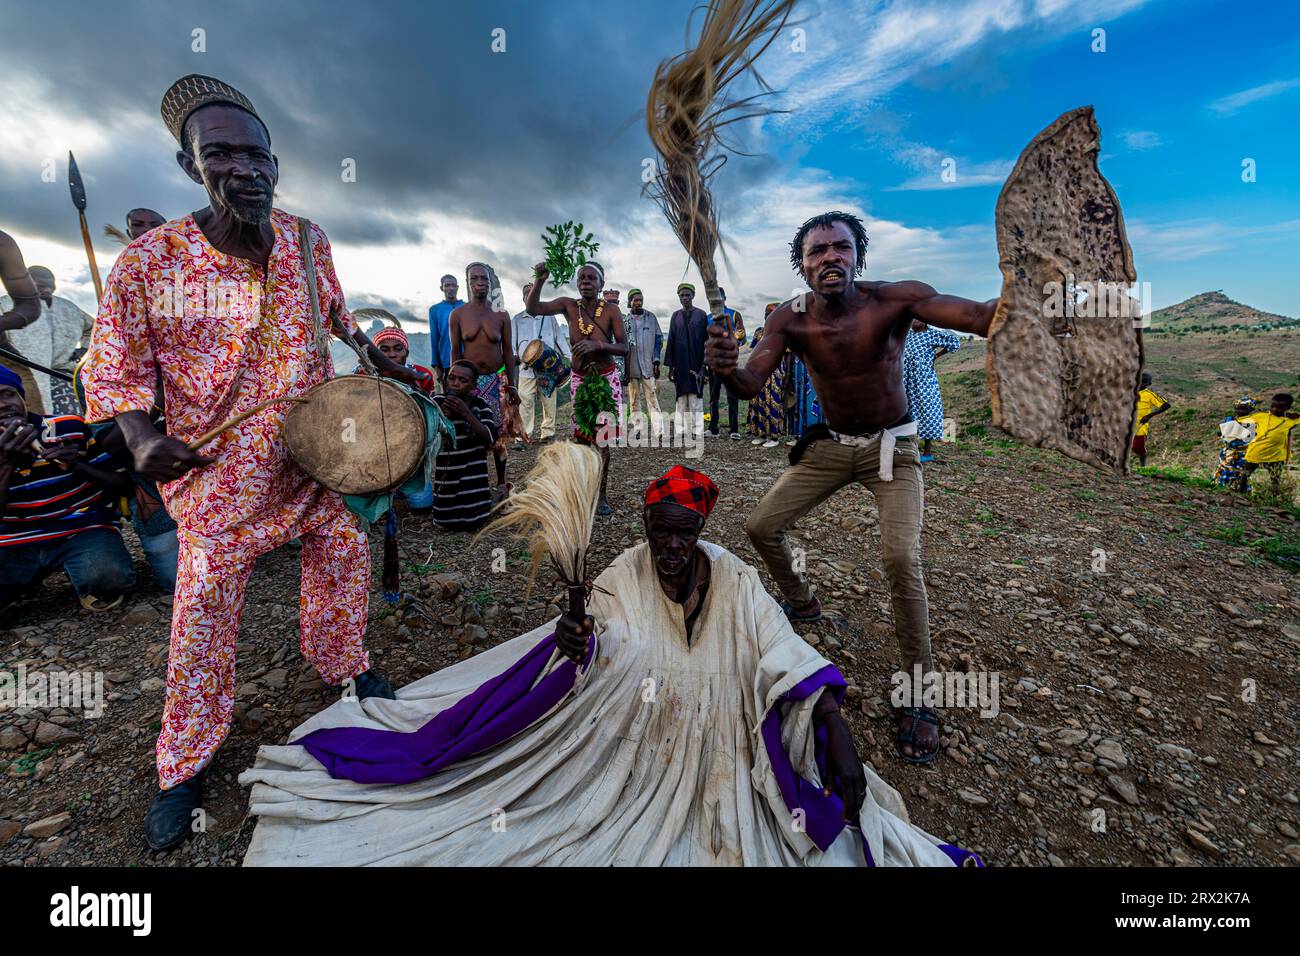 Popolo tribale Kapsiki che pratica una danza tradizionale, Rhumsiki, Mandara Mountains, far North province, Camerun, Africa Foto Stock